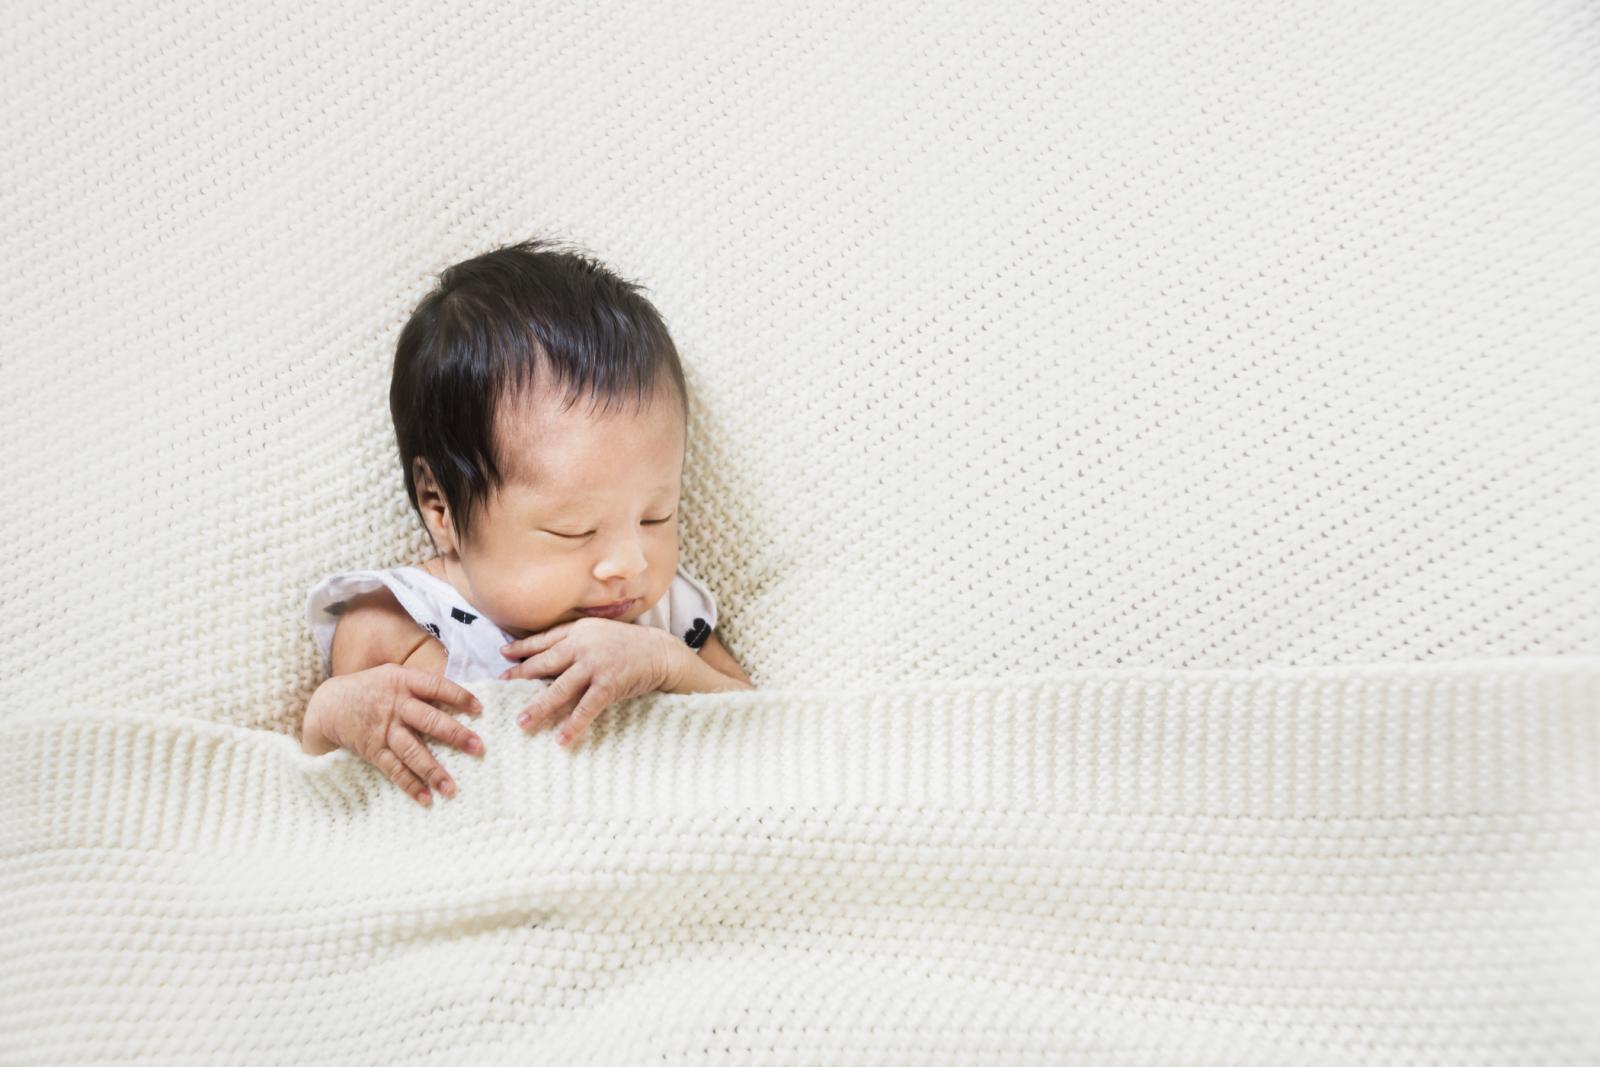 Seventh Generation Baby Diaper Rash Prevention